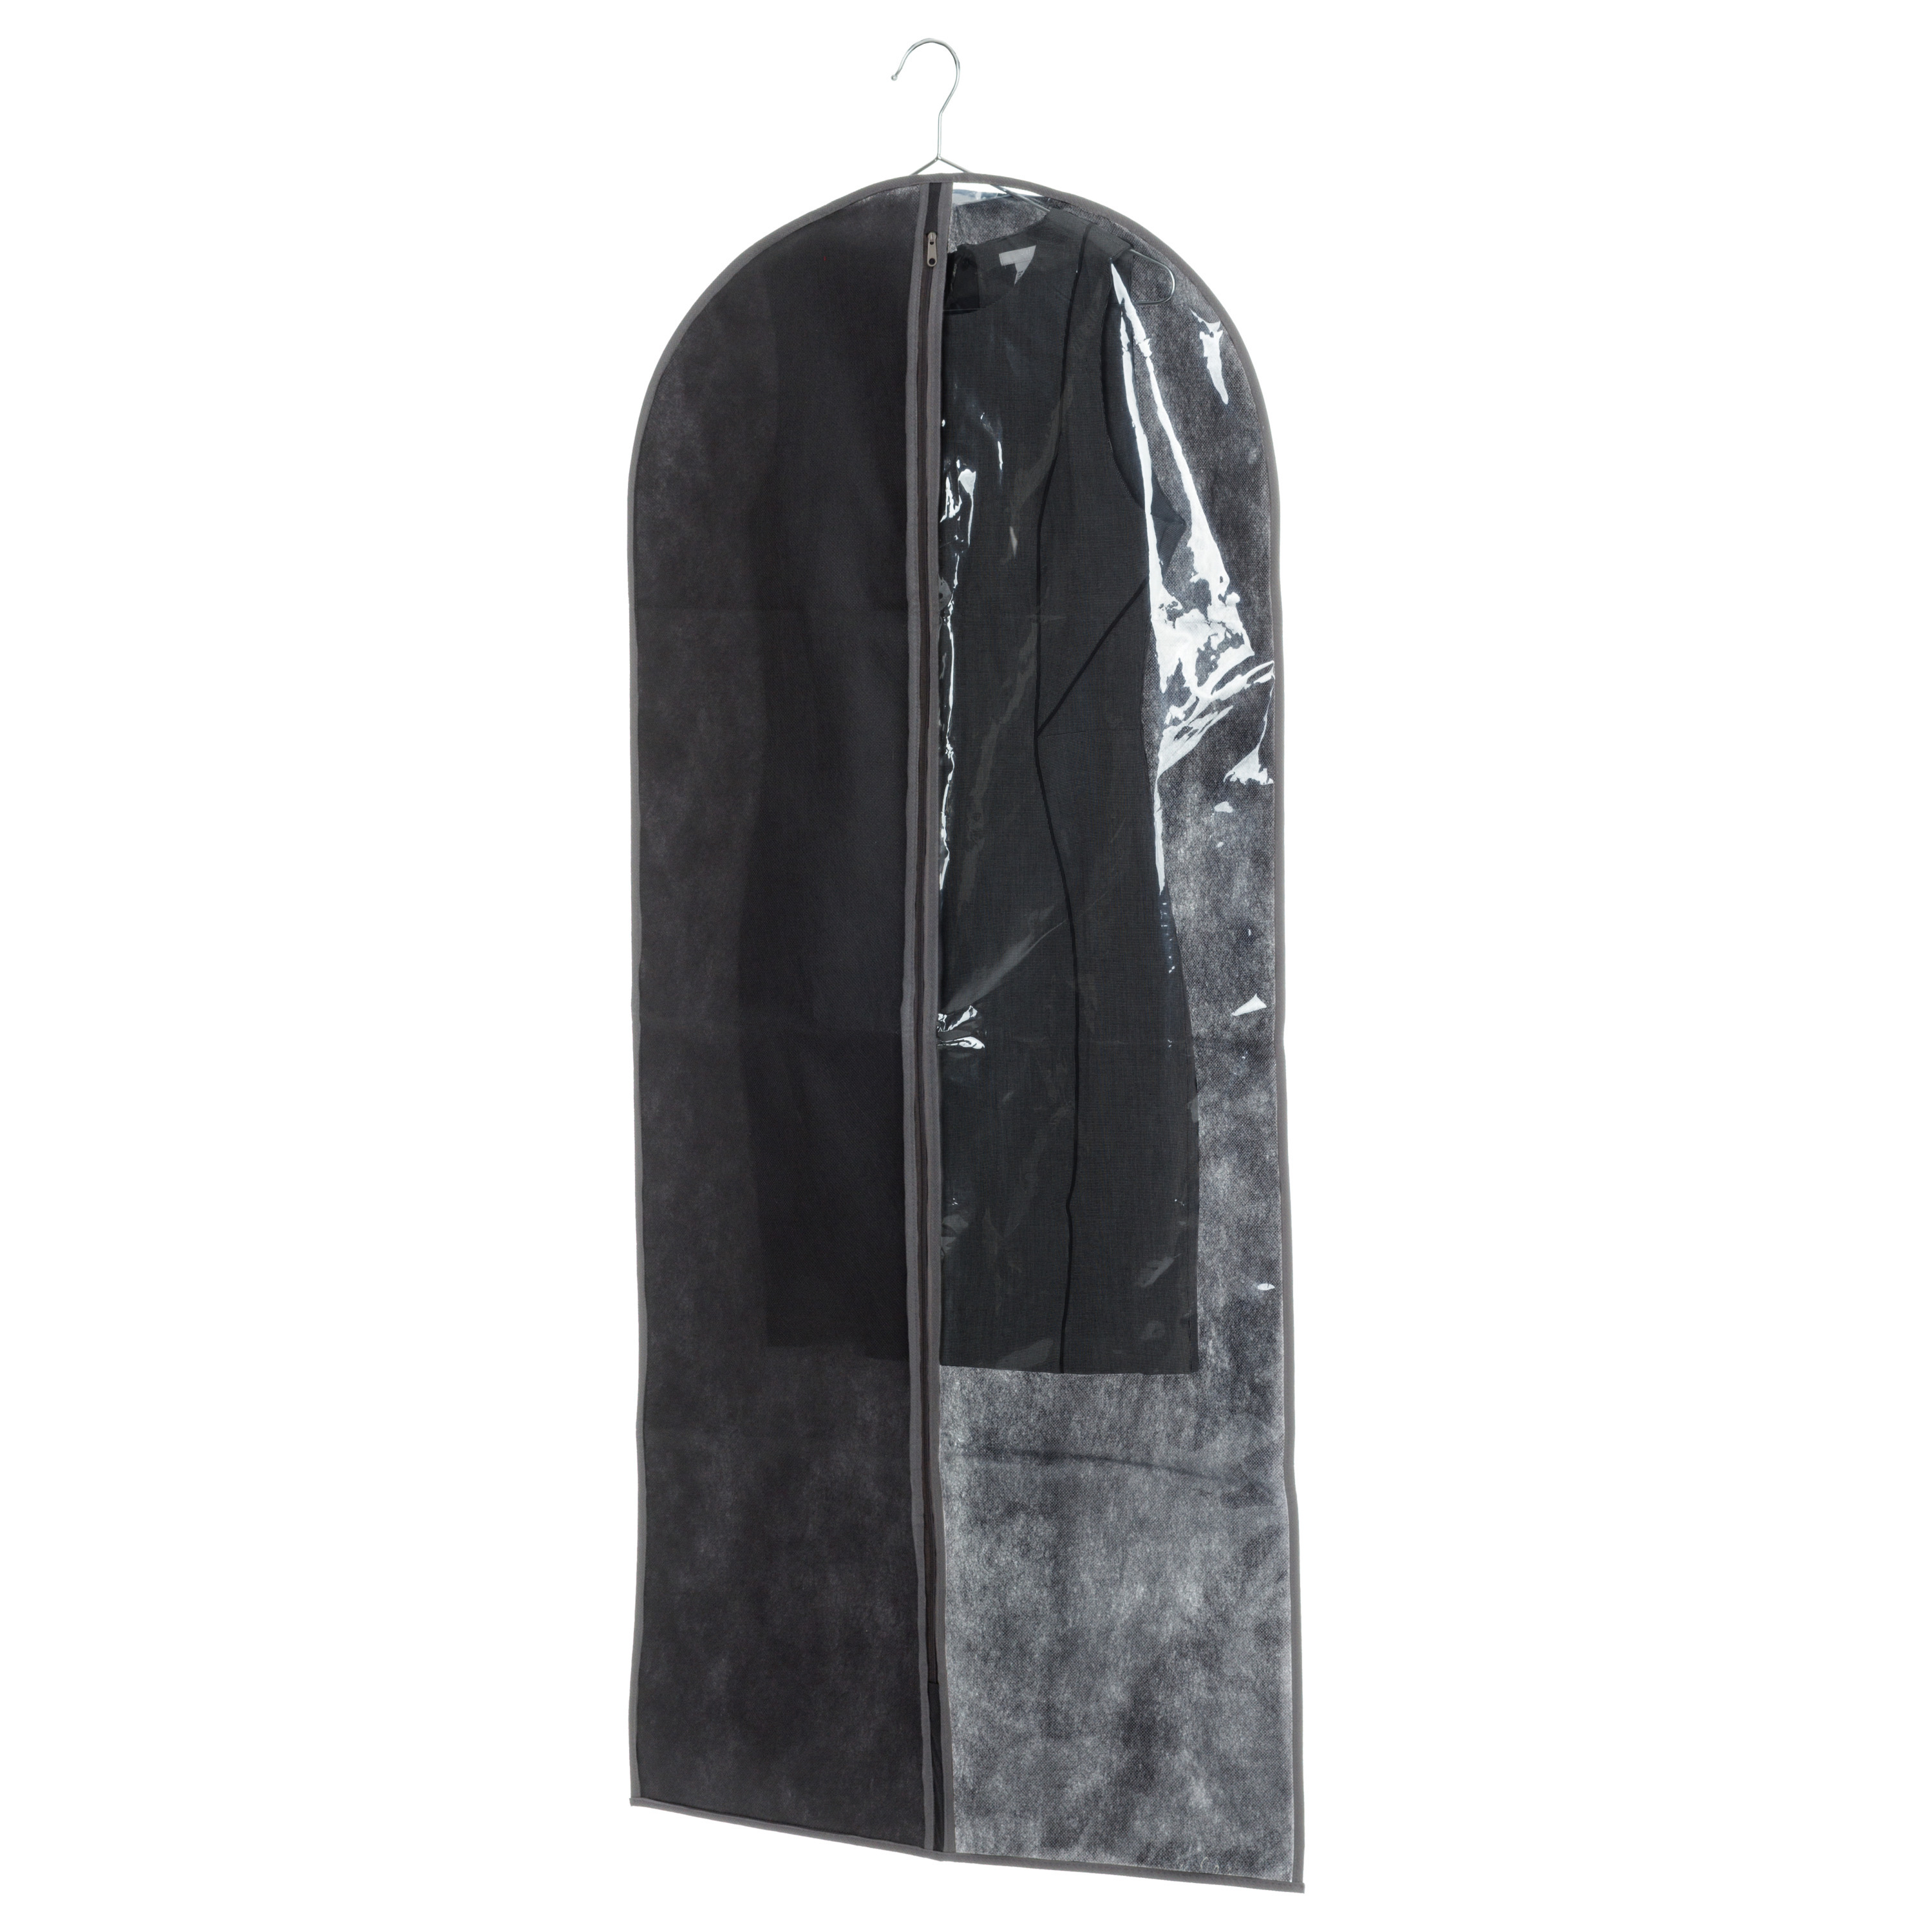 Kleding-beschermhoes zwart 135 cm inclusief kledinghangers